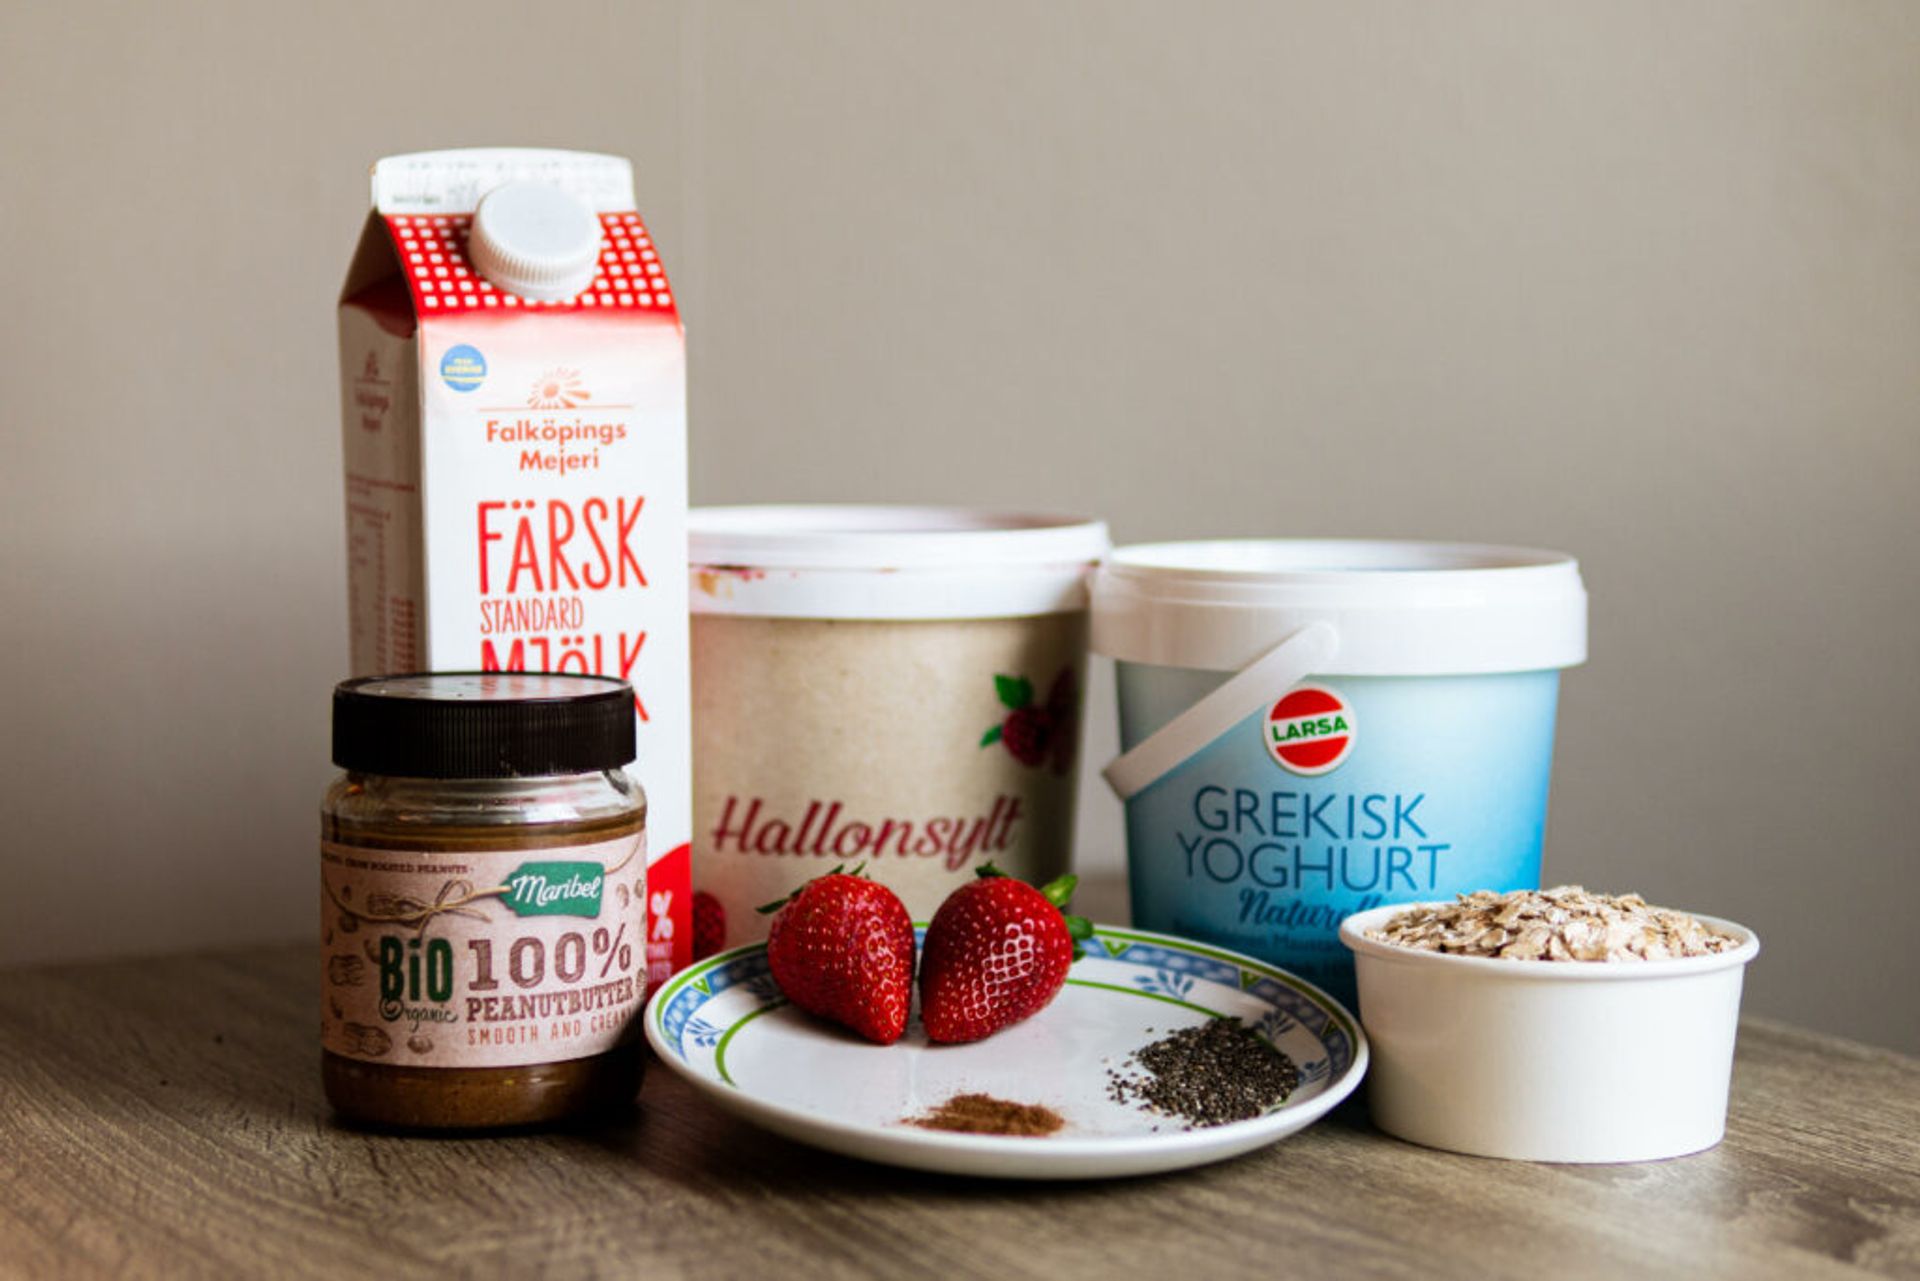 Ingredients for the overnight oats: milk, yoghurt, strawberries, oats, peanut butter